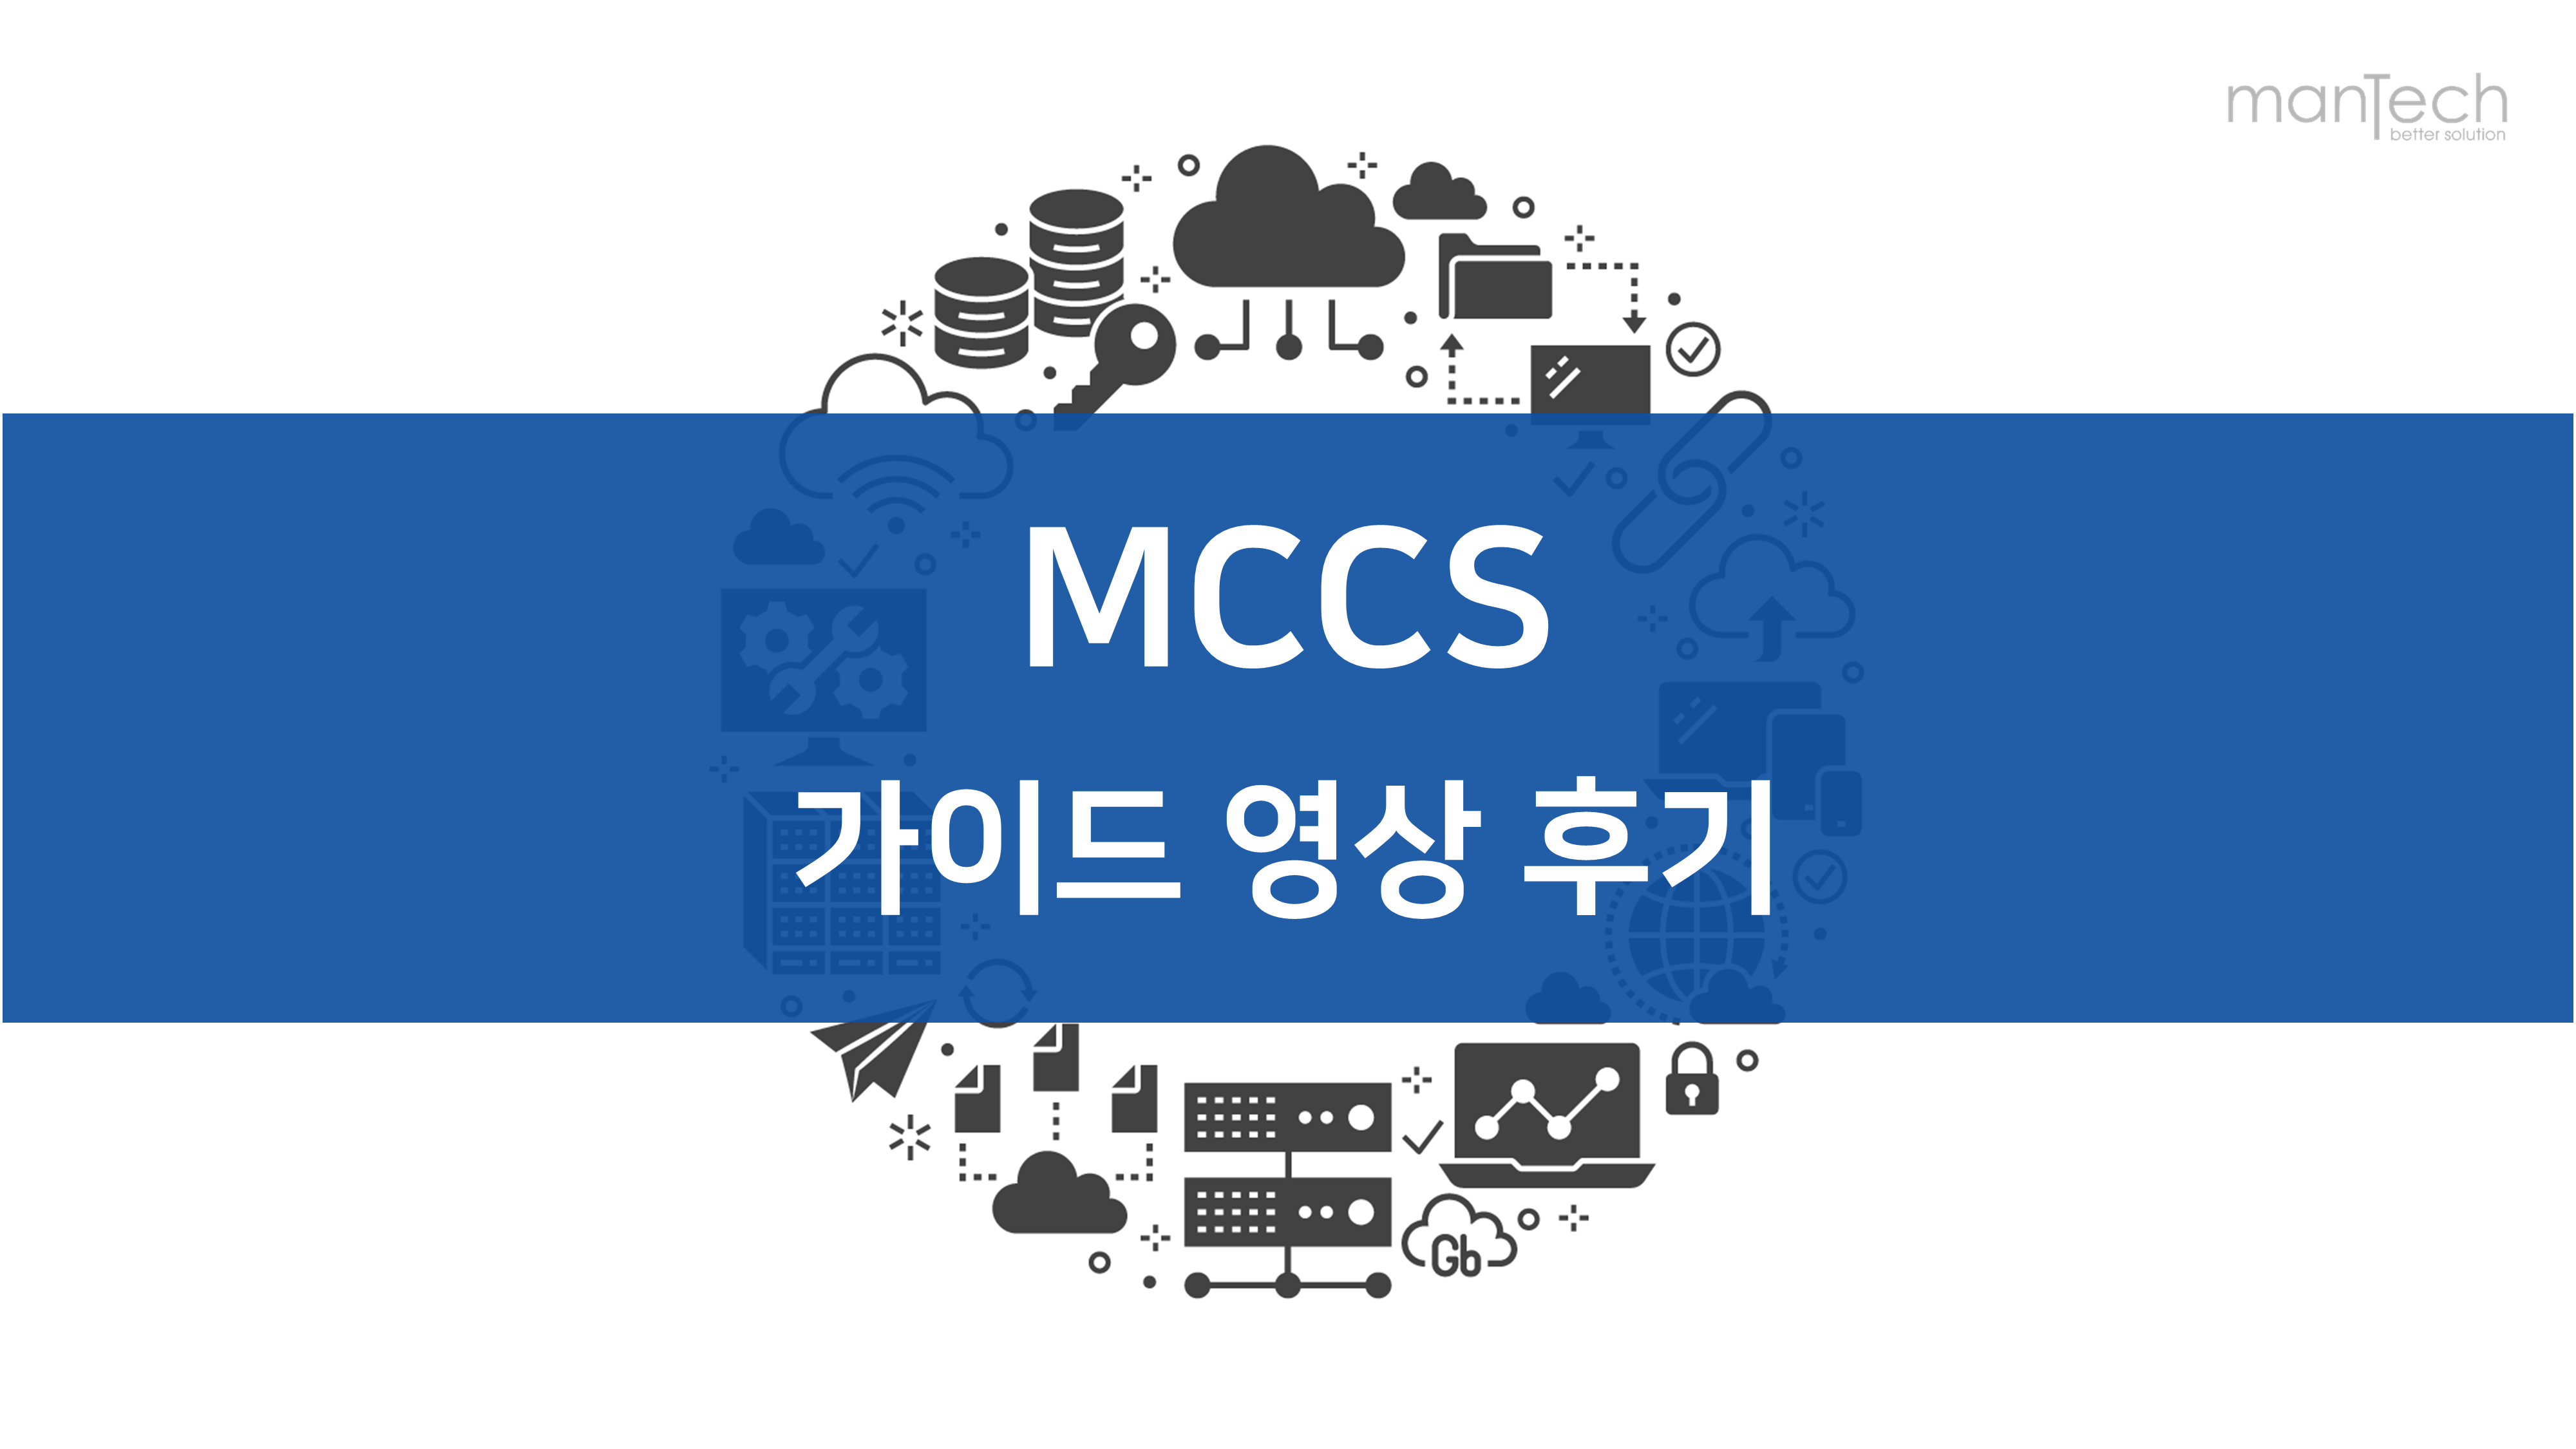 MCCS 가이드 동영상 실사용 후기